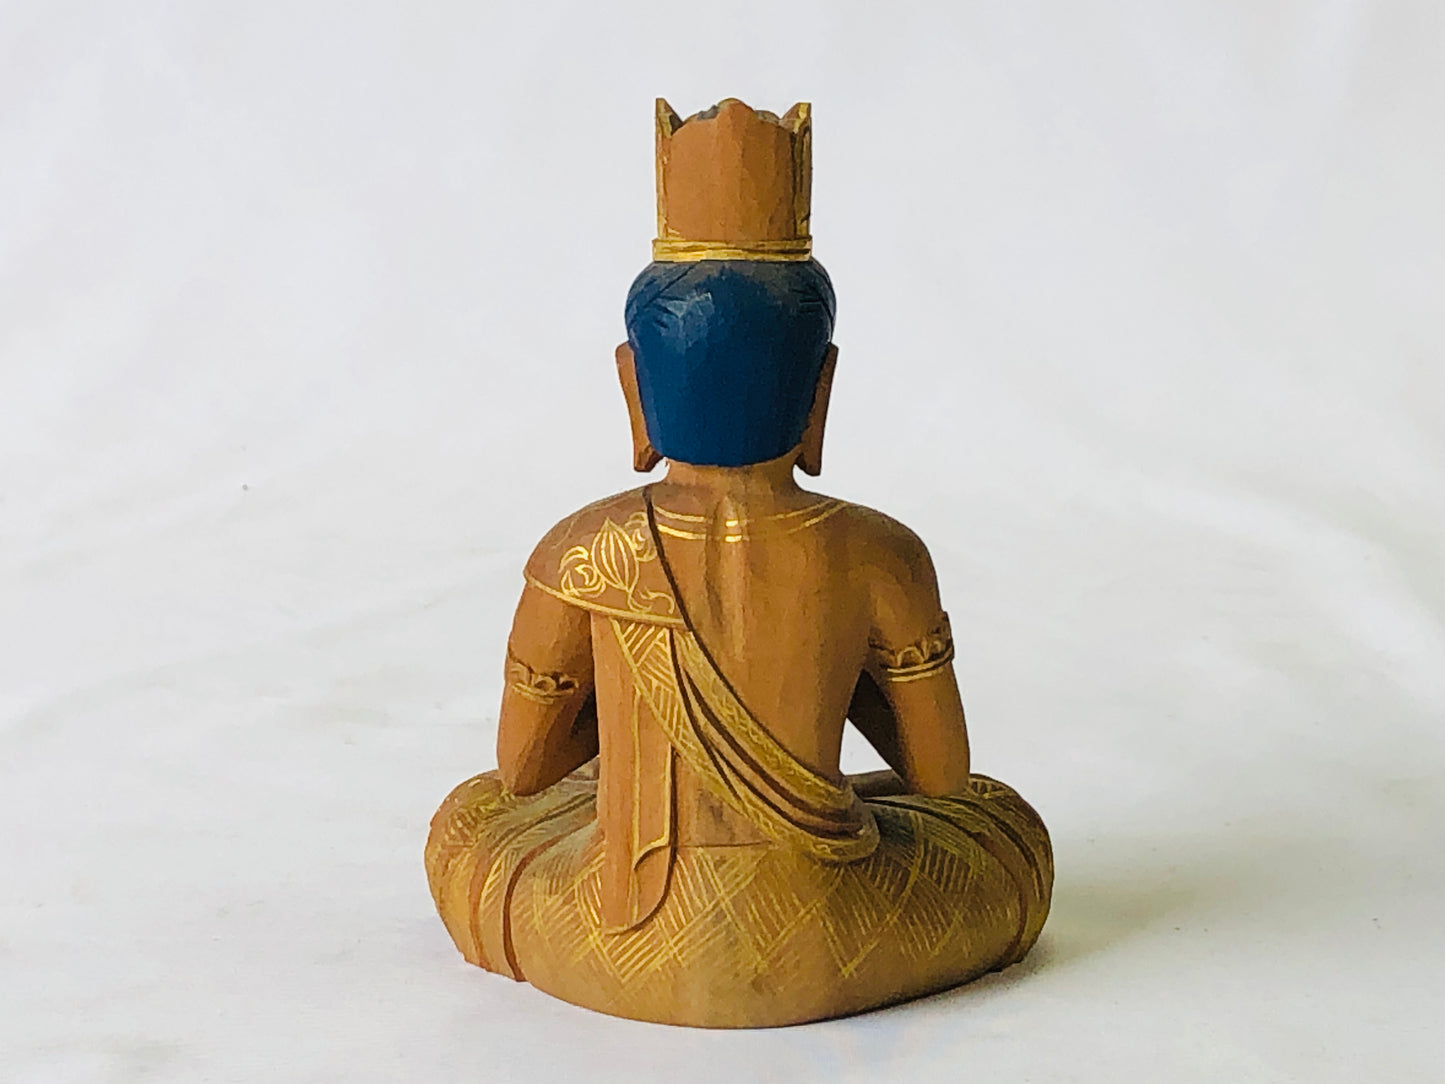 Y4945 STATUE wood carving Buddha figure sandalwood Japan antique decor vintage